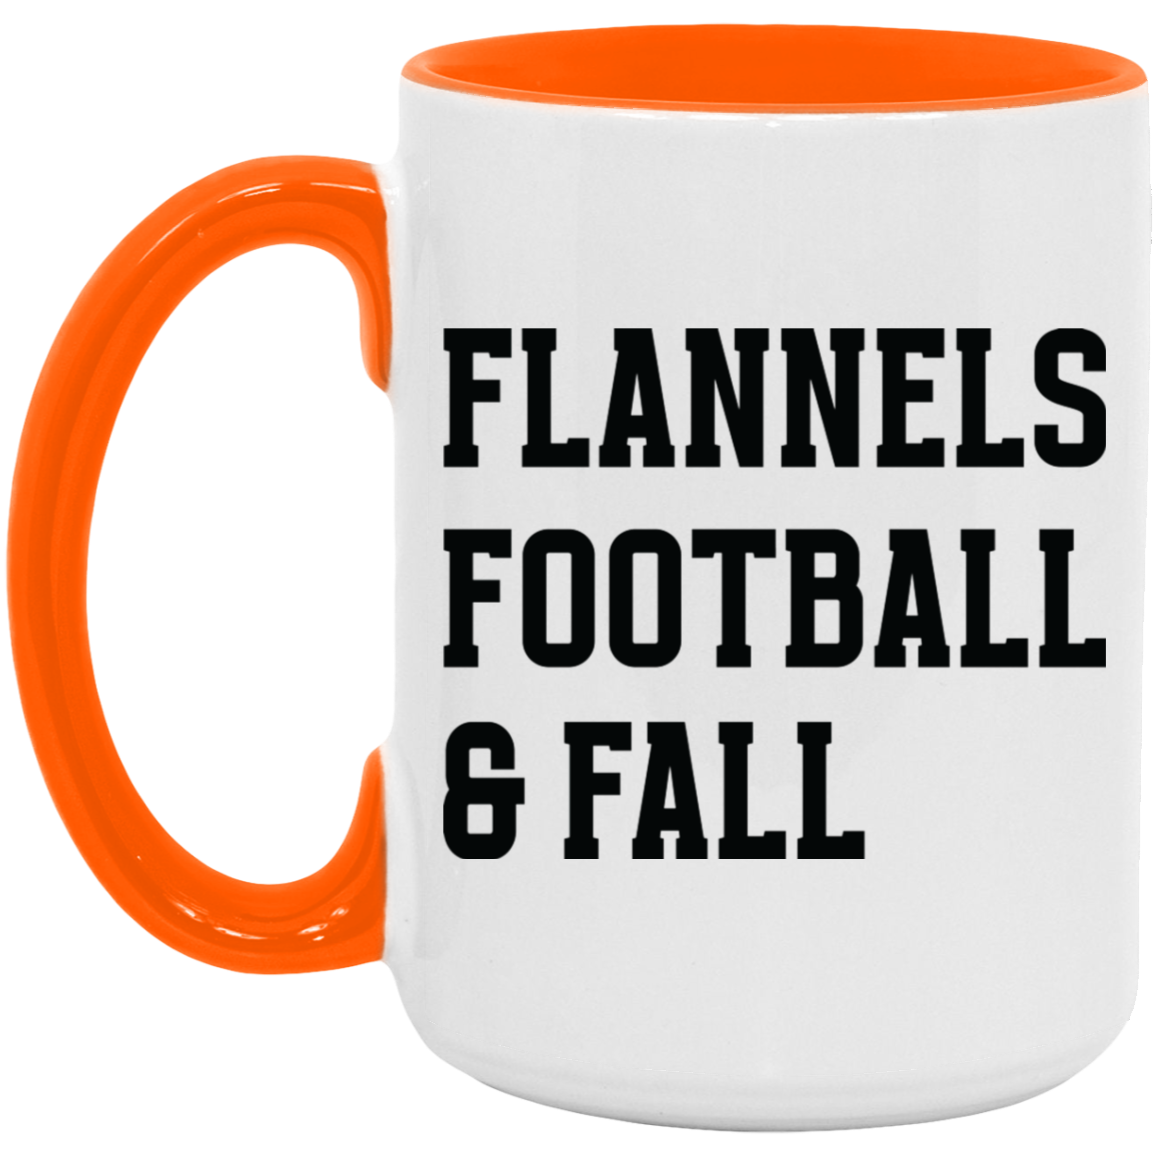 Flannels, Football, & Fall Mug